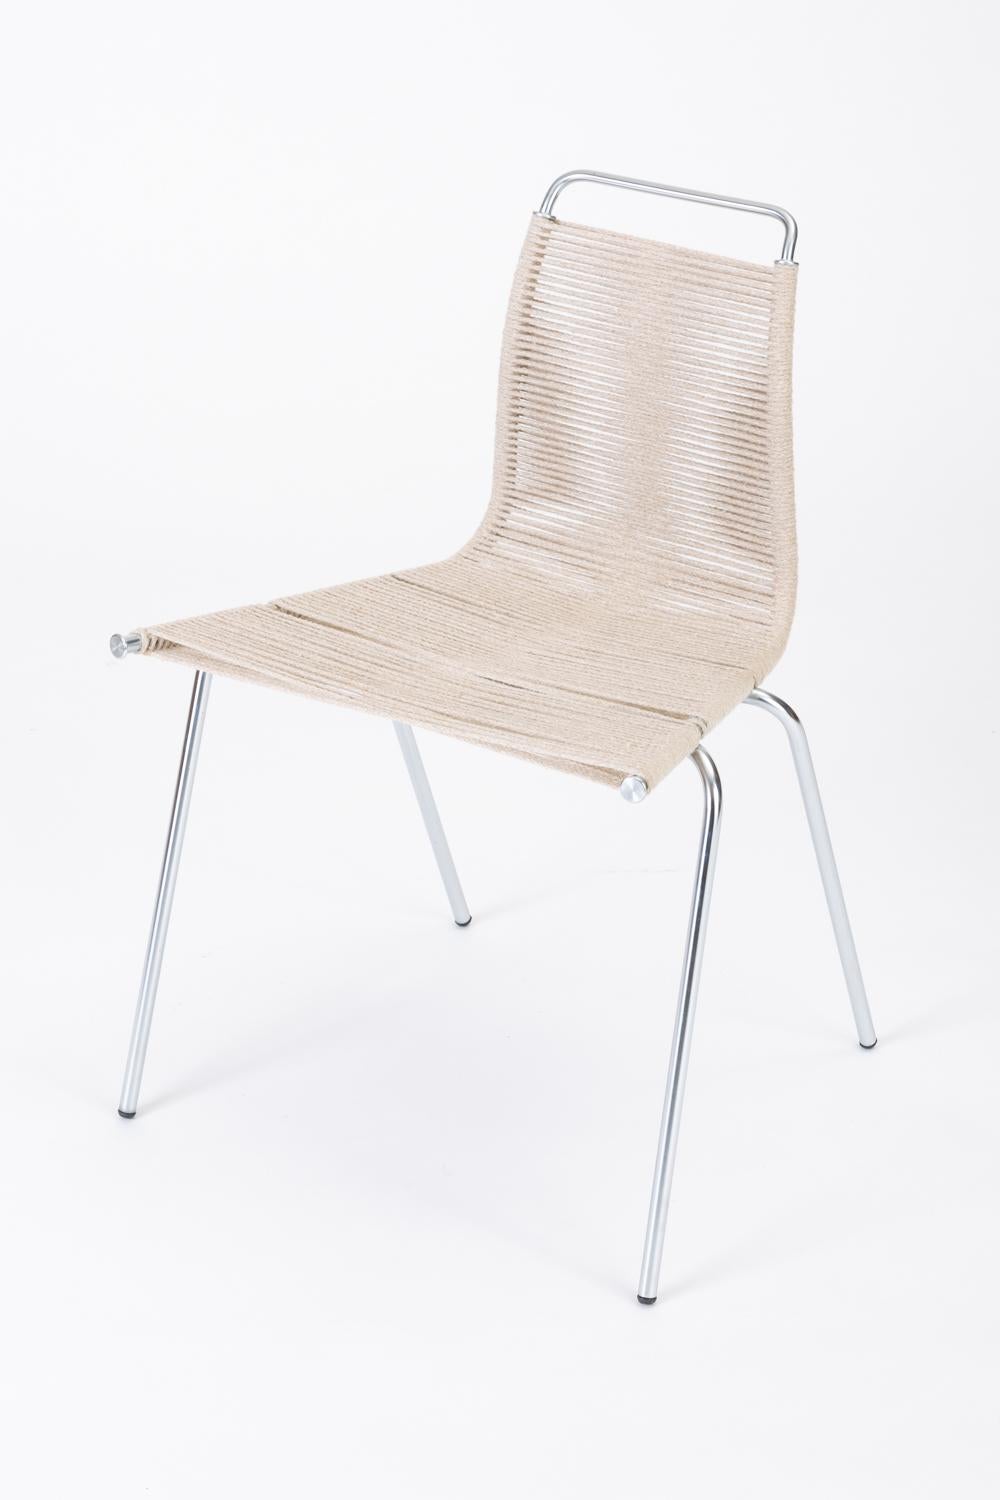 Danish Single PK-1 Dining or Accent Chair by Poul Kjærholm for E Kold Christensen